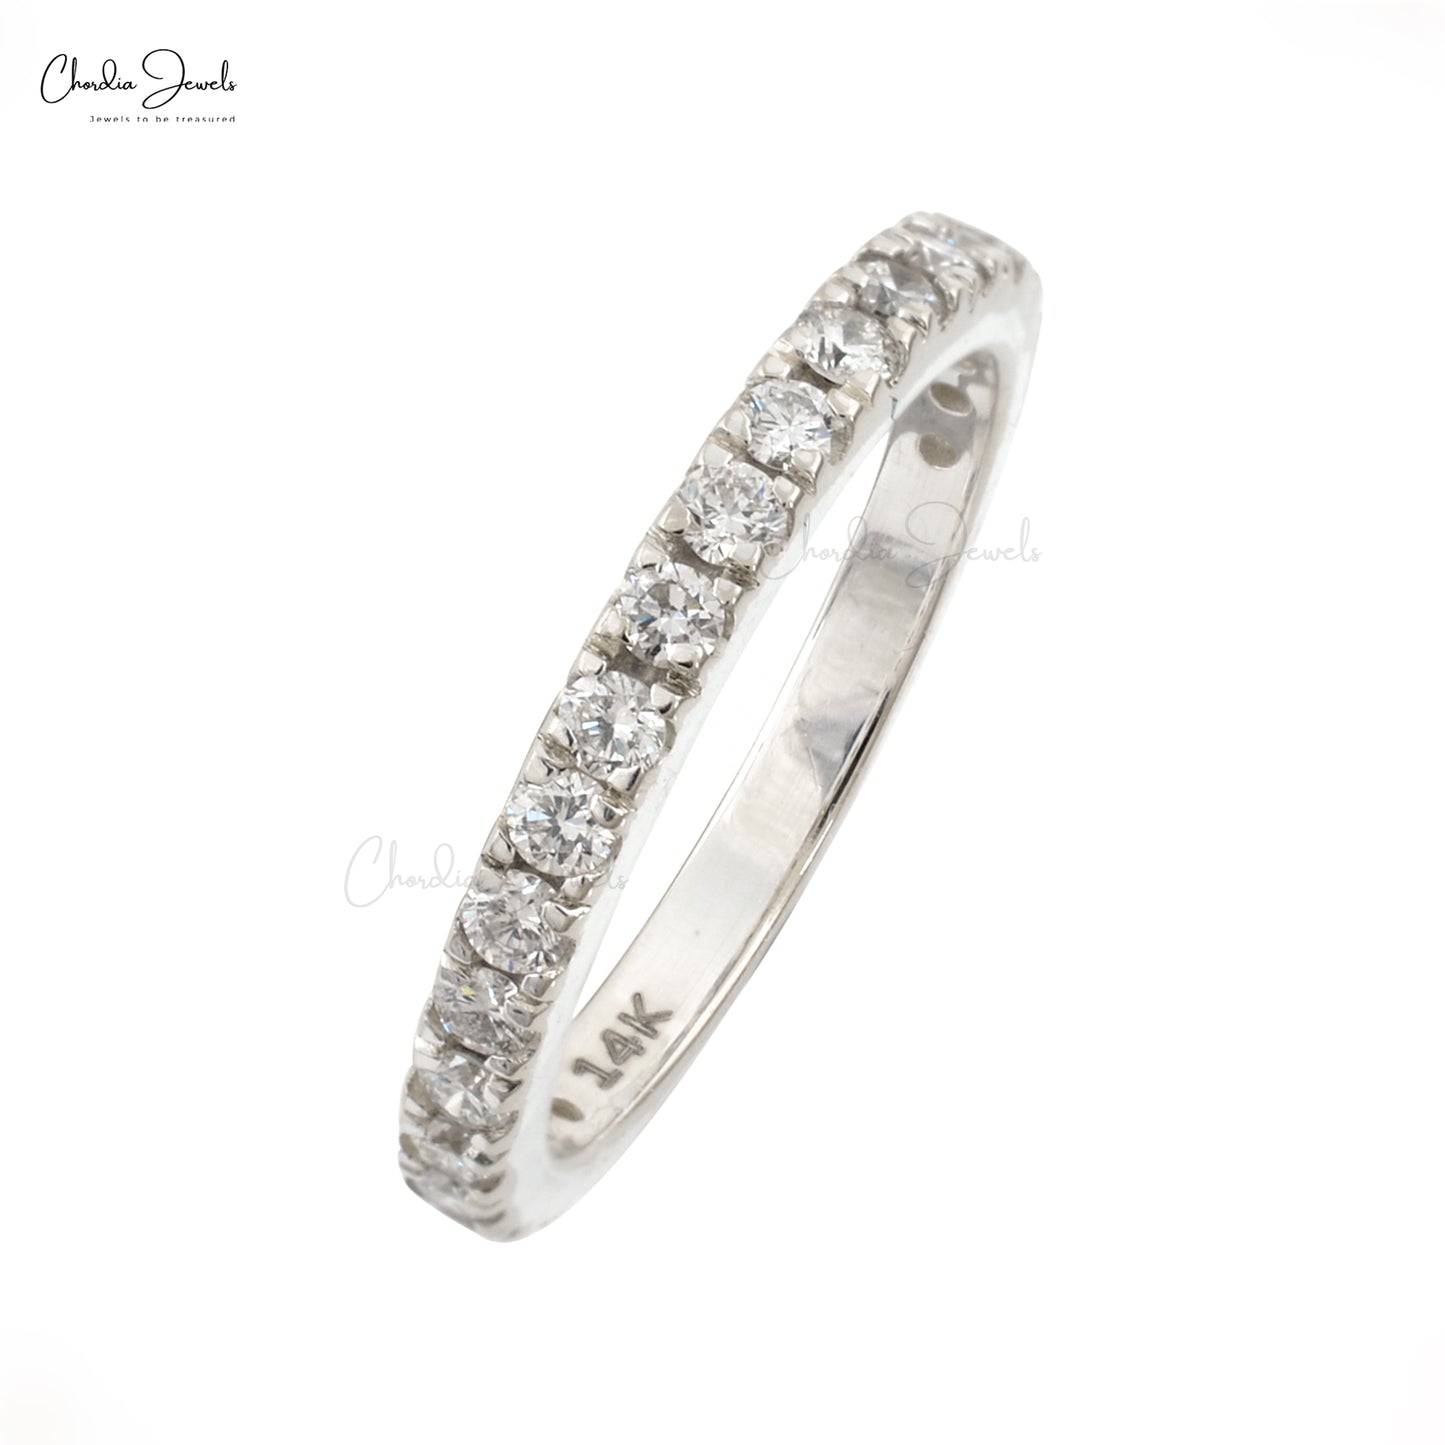 4 MM French Pave Set Round Brilliant Cut Diamonds Eternity Ring In Platinum  | eBay